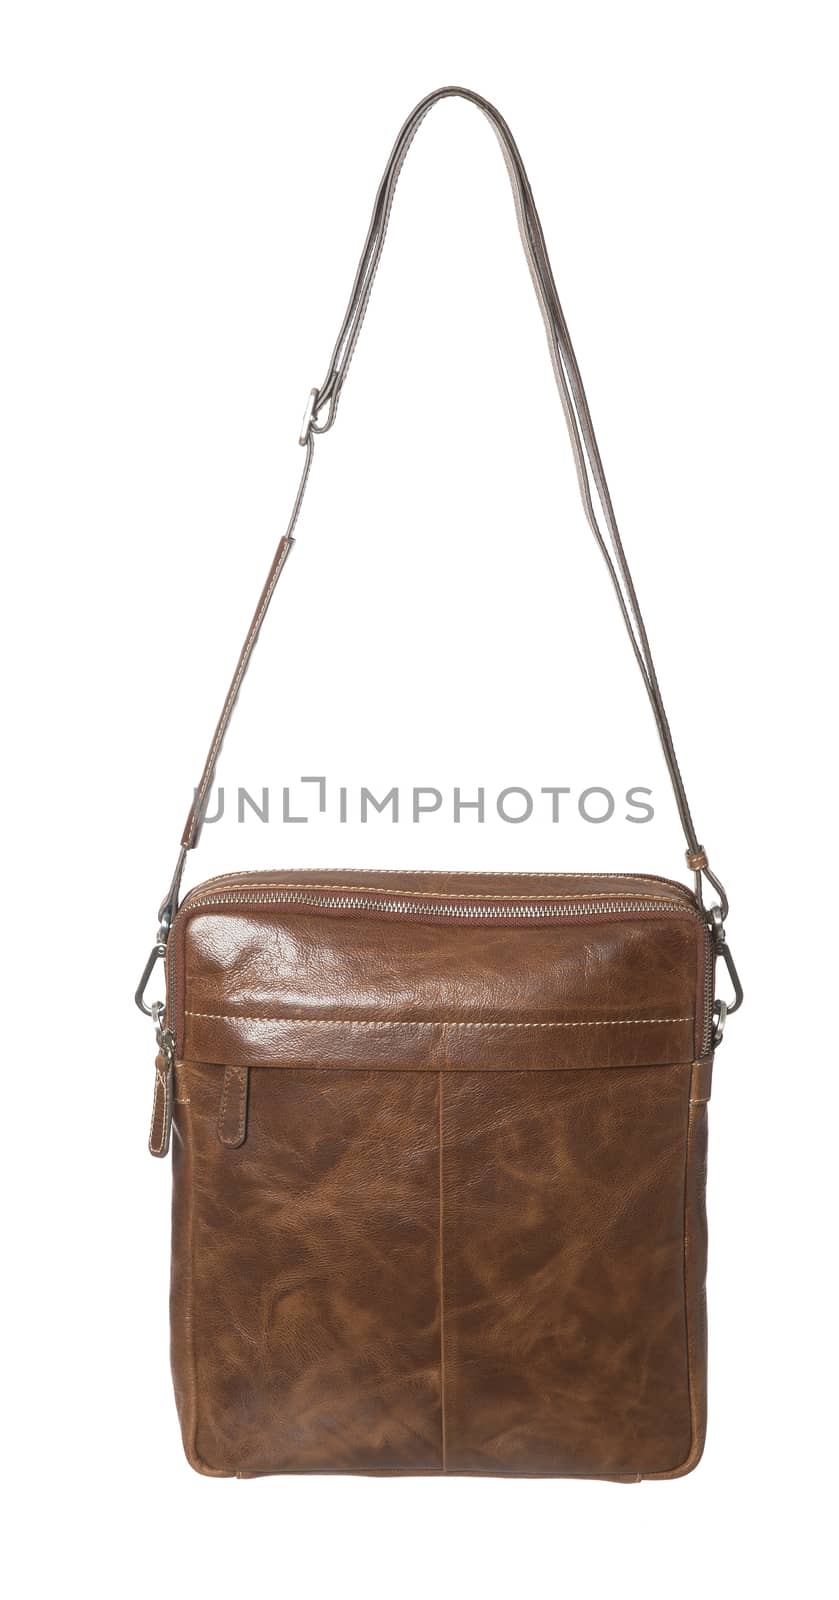 Brown purse by gemenacom